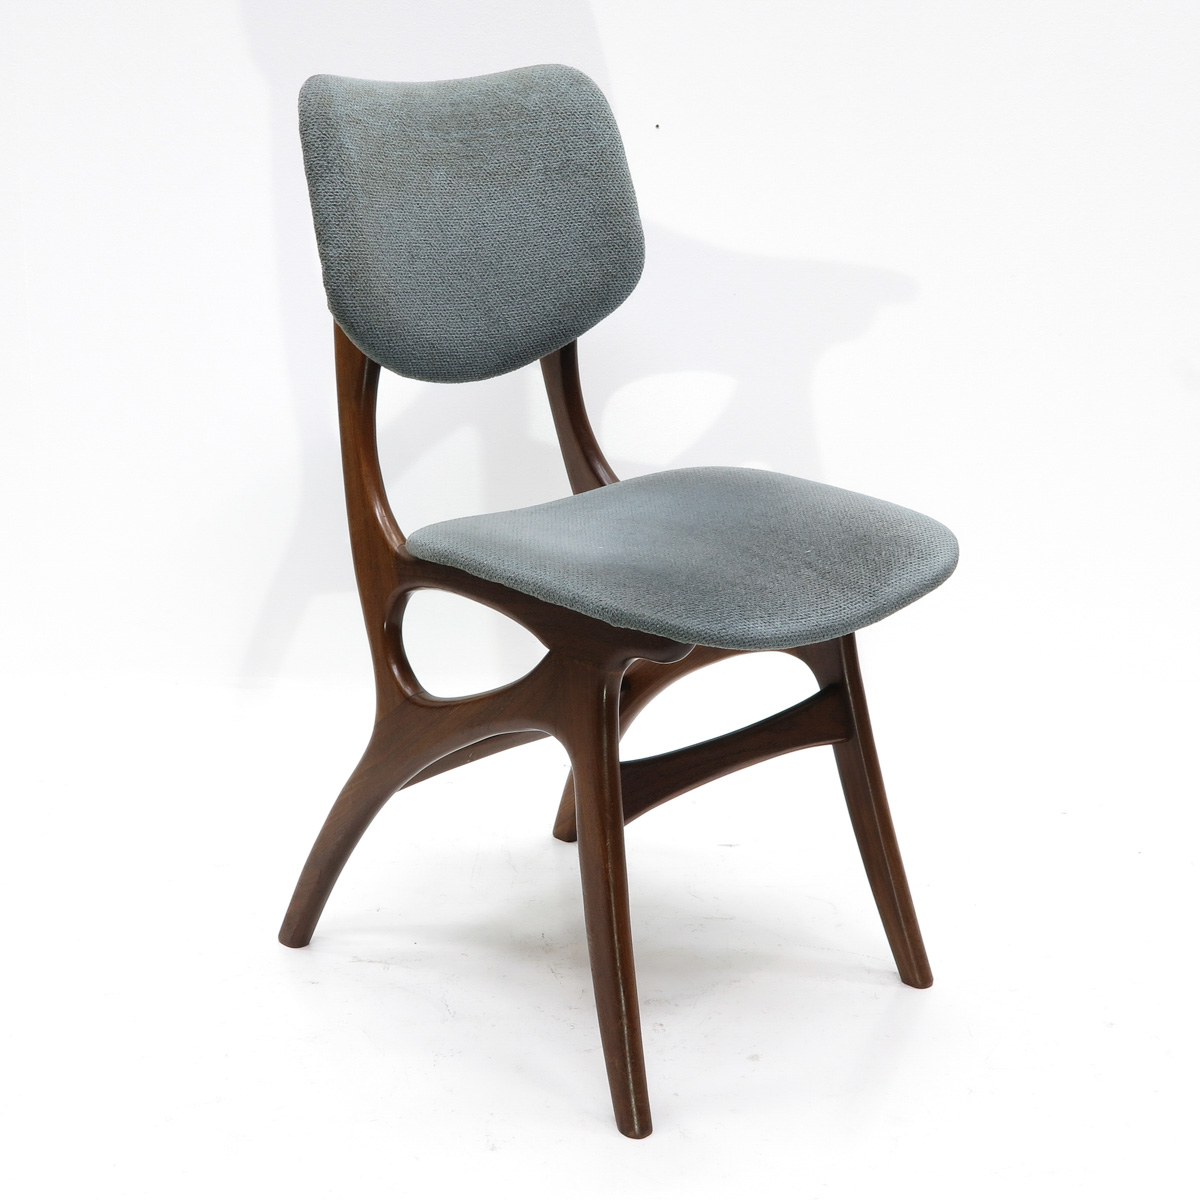 A Set of Four Louis v. Teeffelen Teak Design Chairs - Image 2 of 4